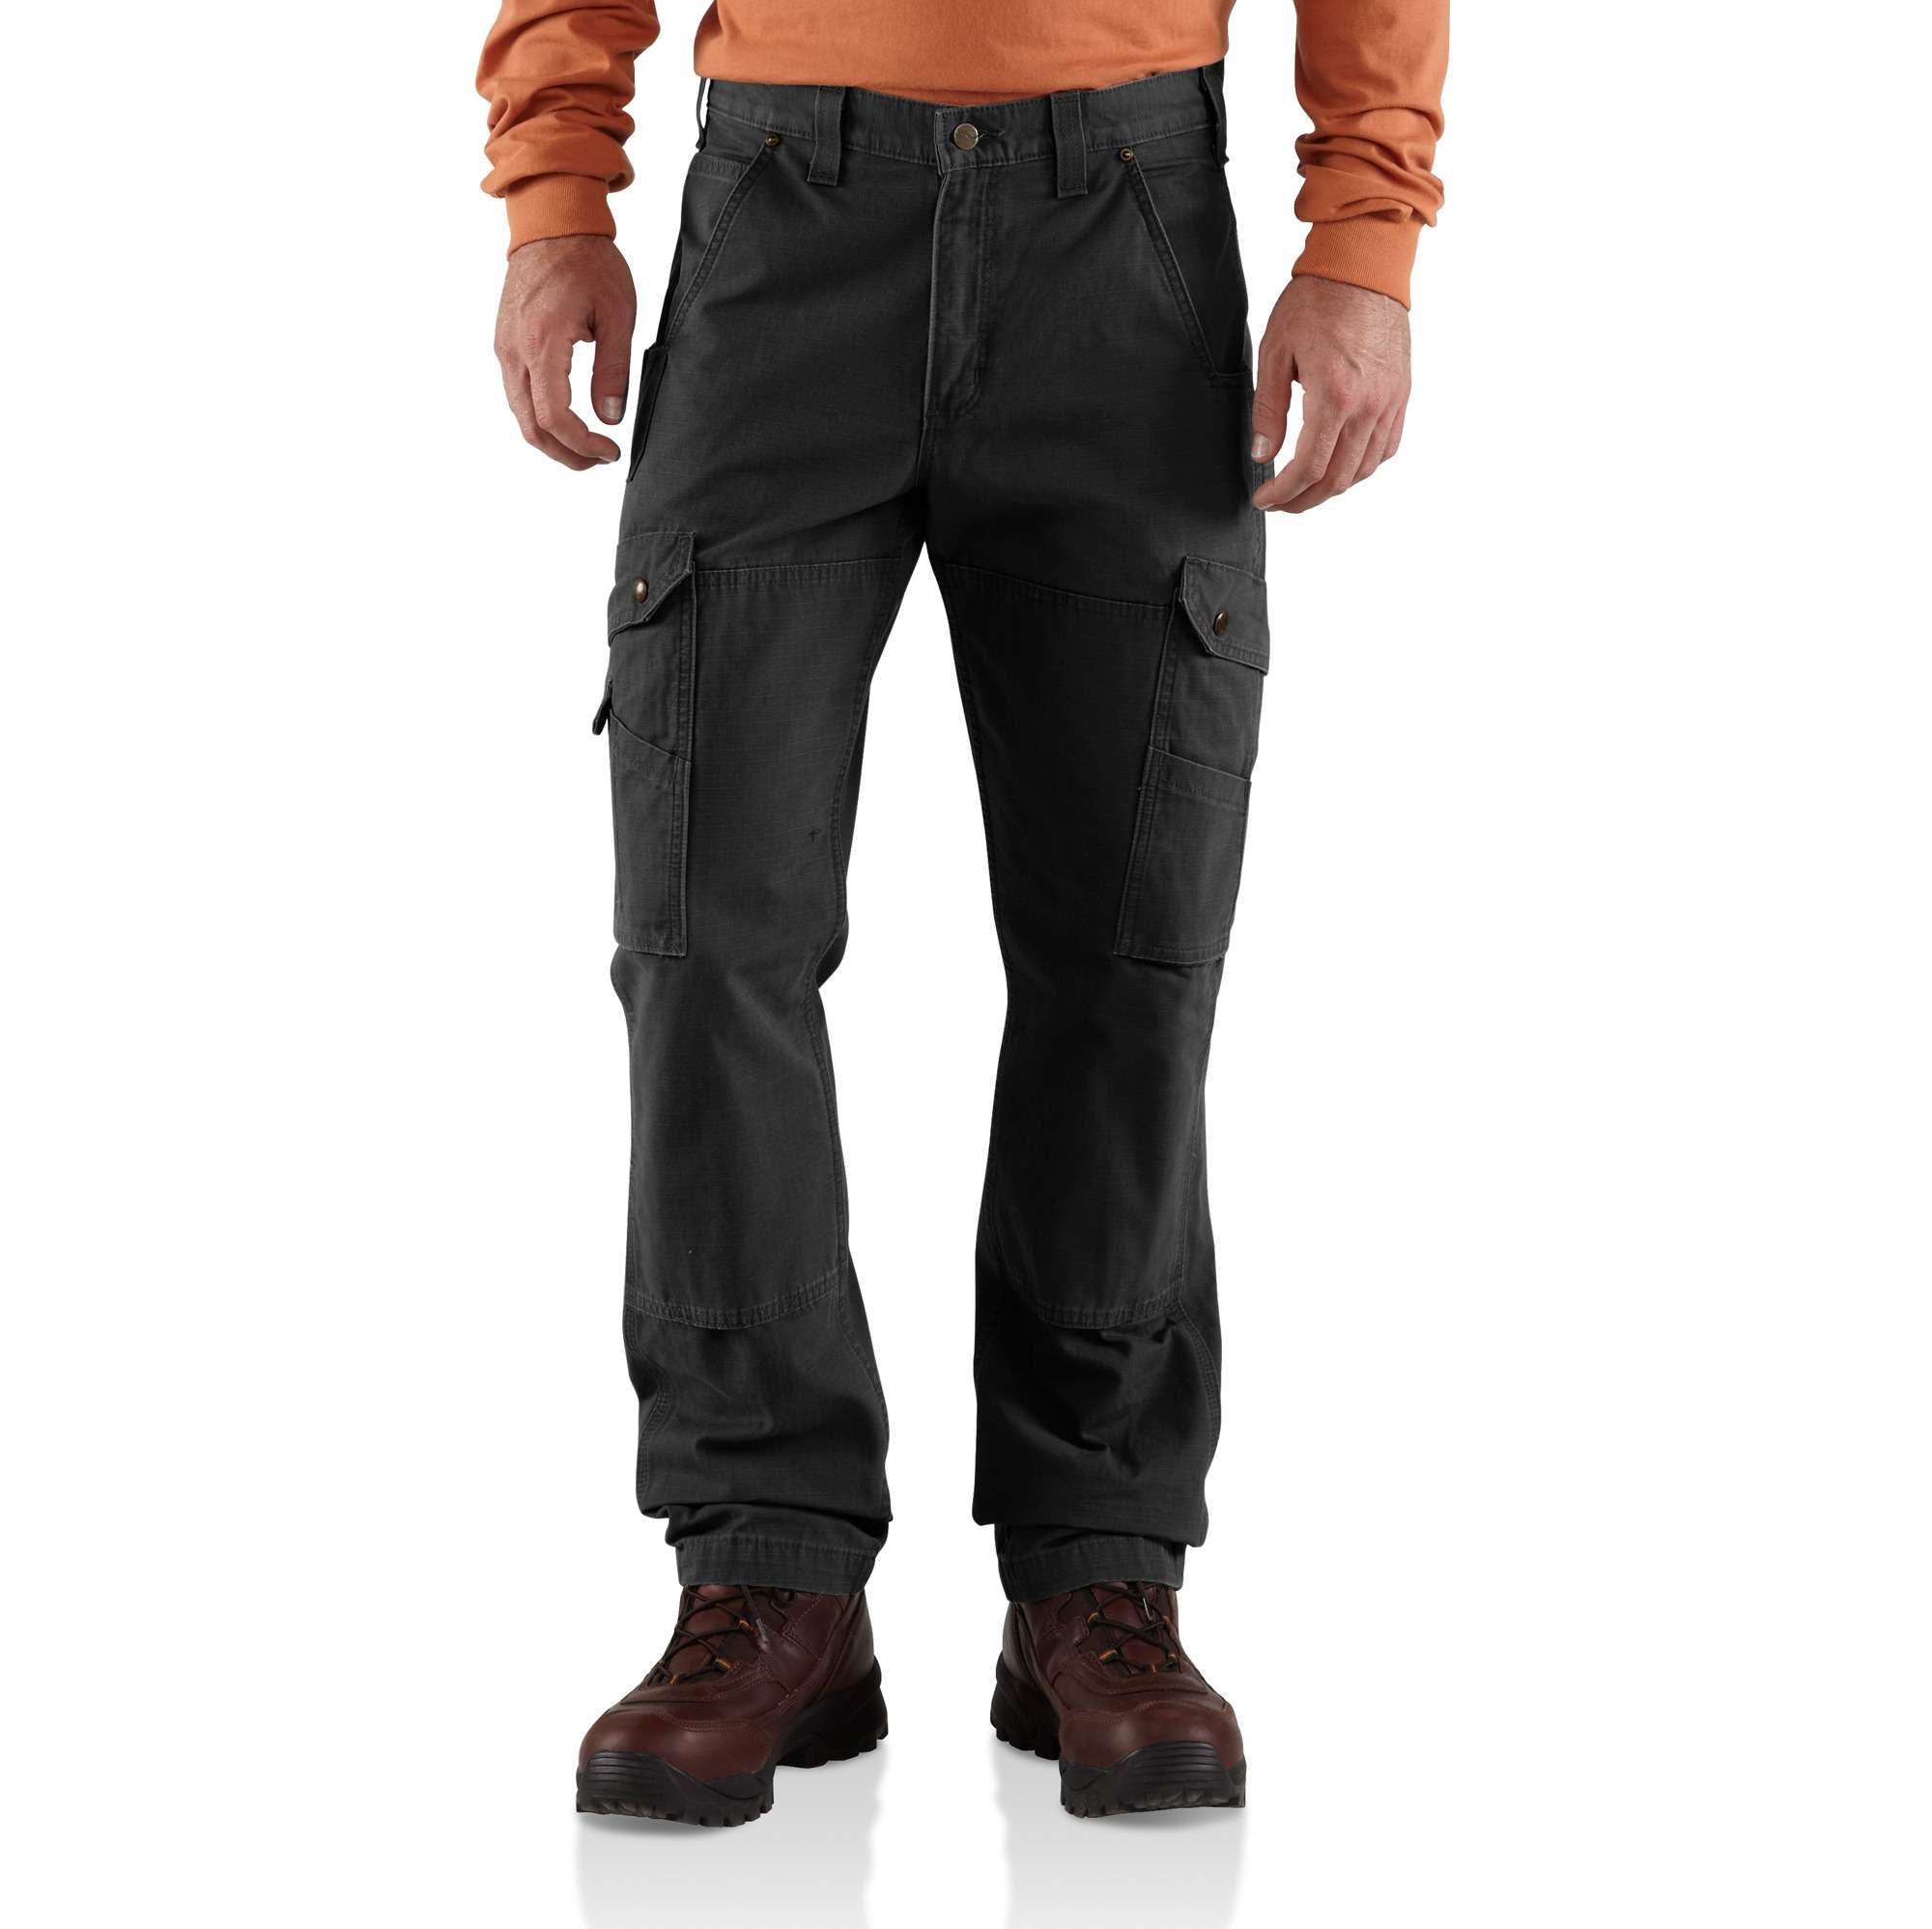 CQR Men's Flex Ripstop Tactical Pants, Water Resistant Stretch Cargo Pants,  Ligh | eBay